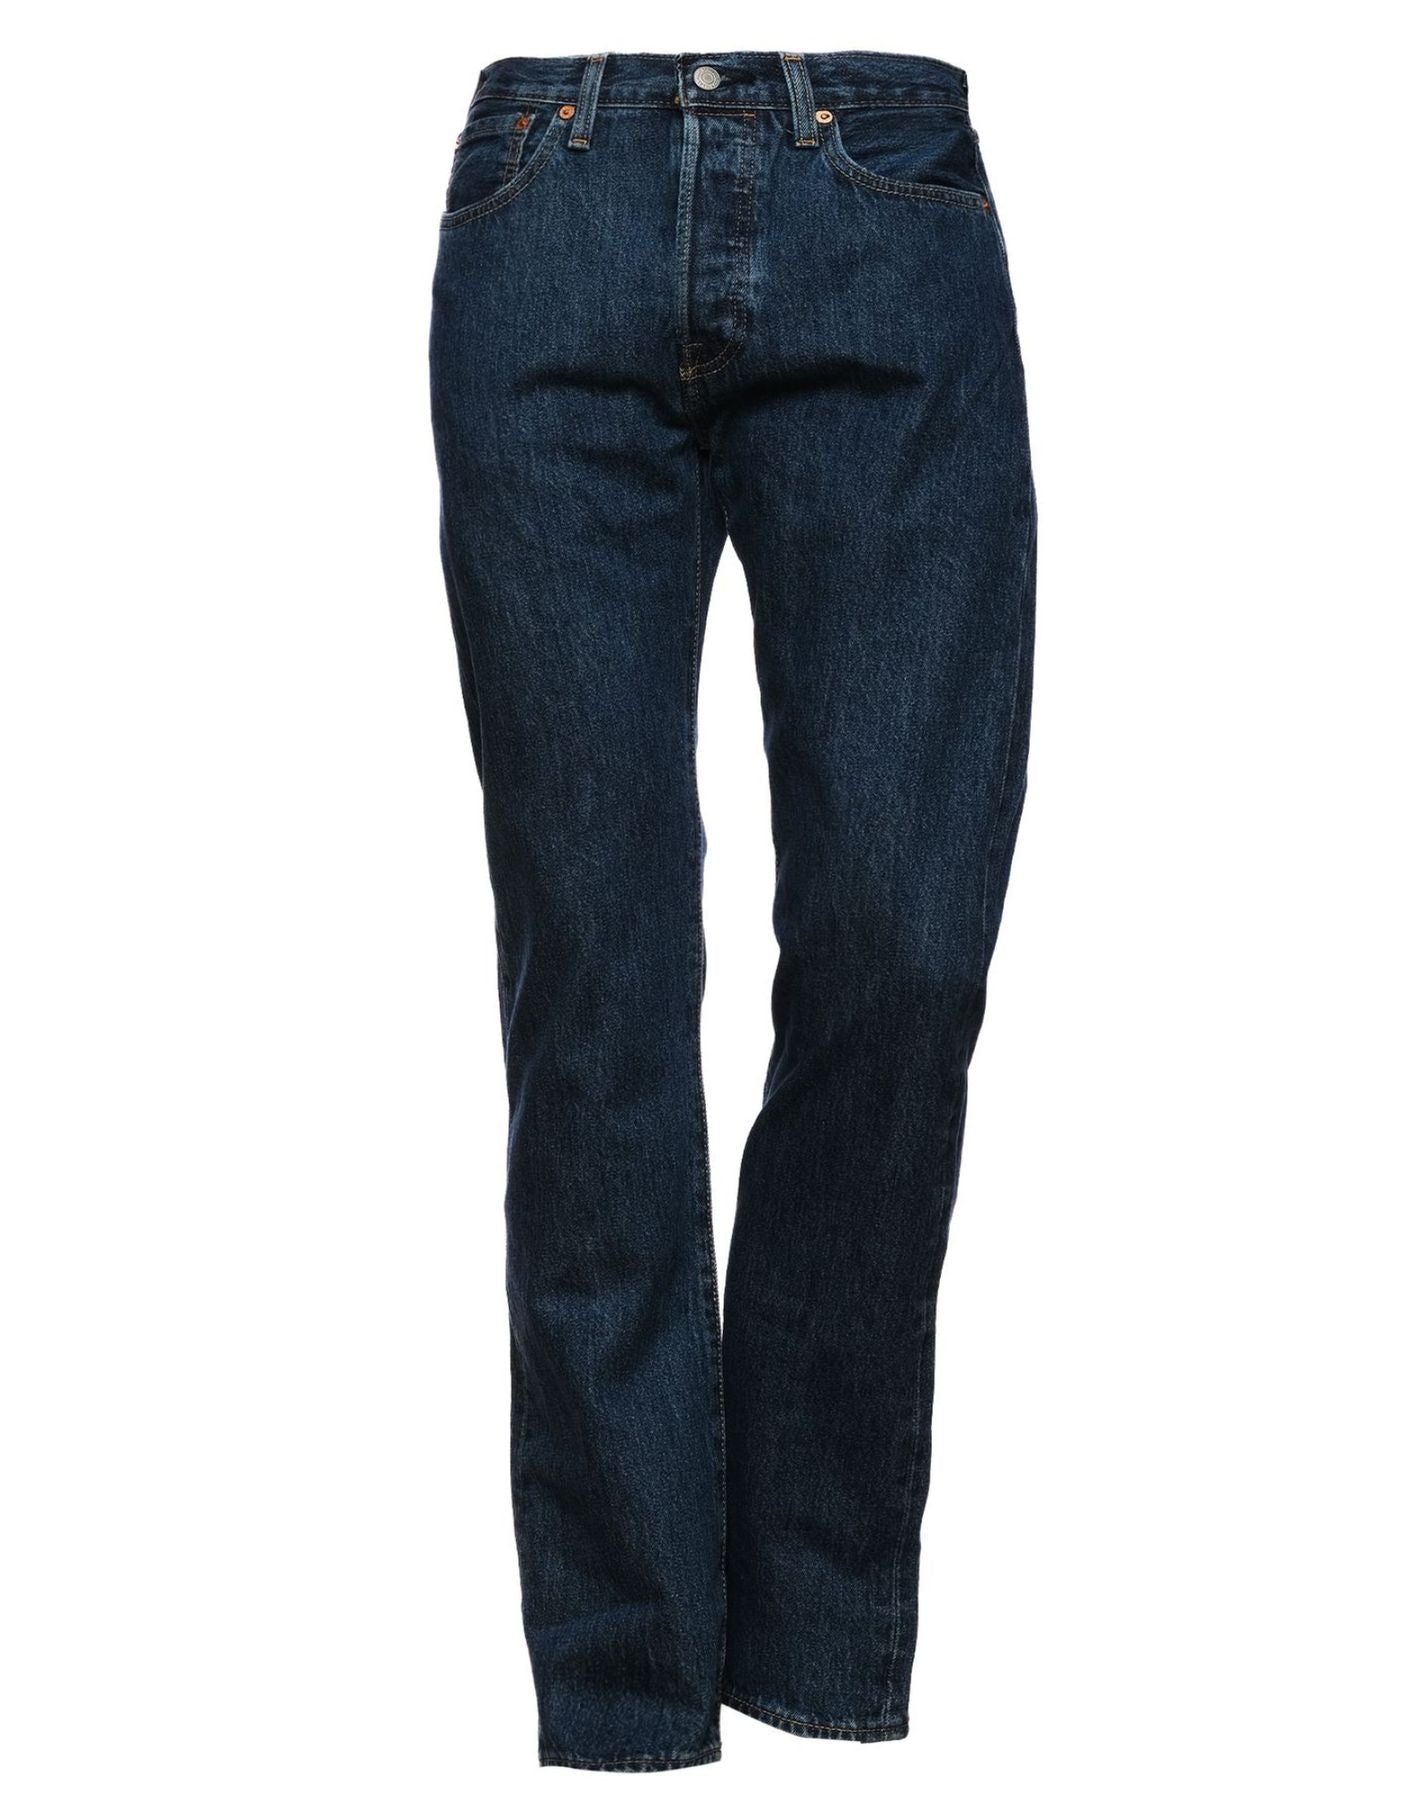 Jeans für Mann 00501 0114 Blue Levi's